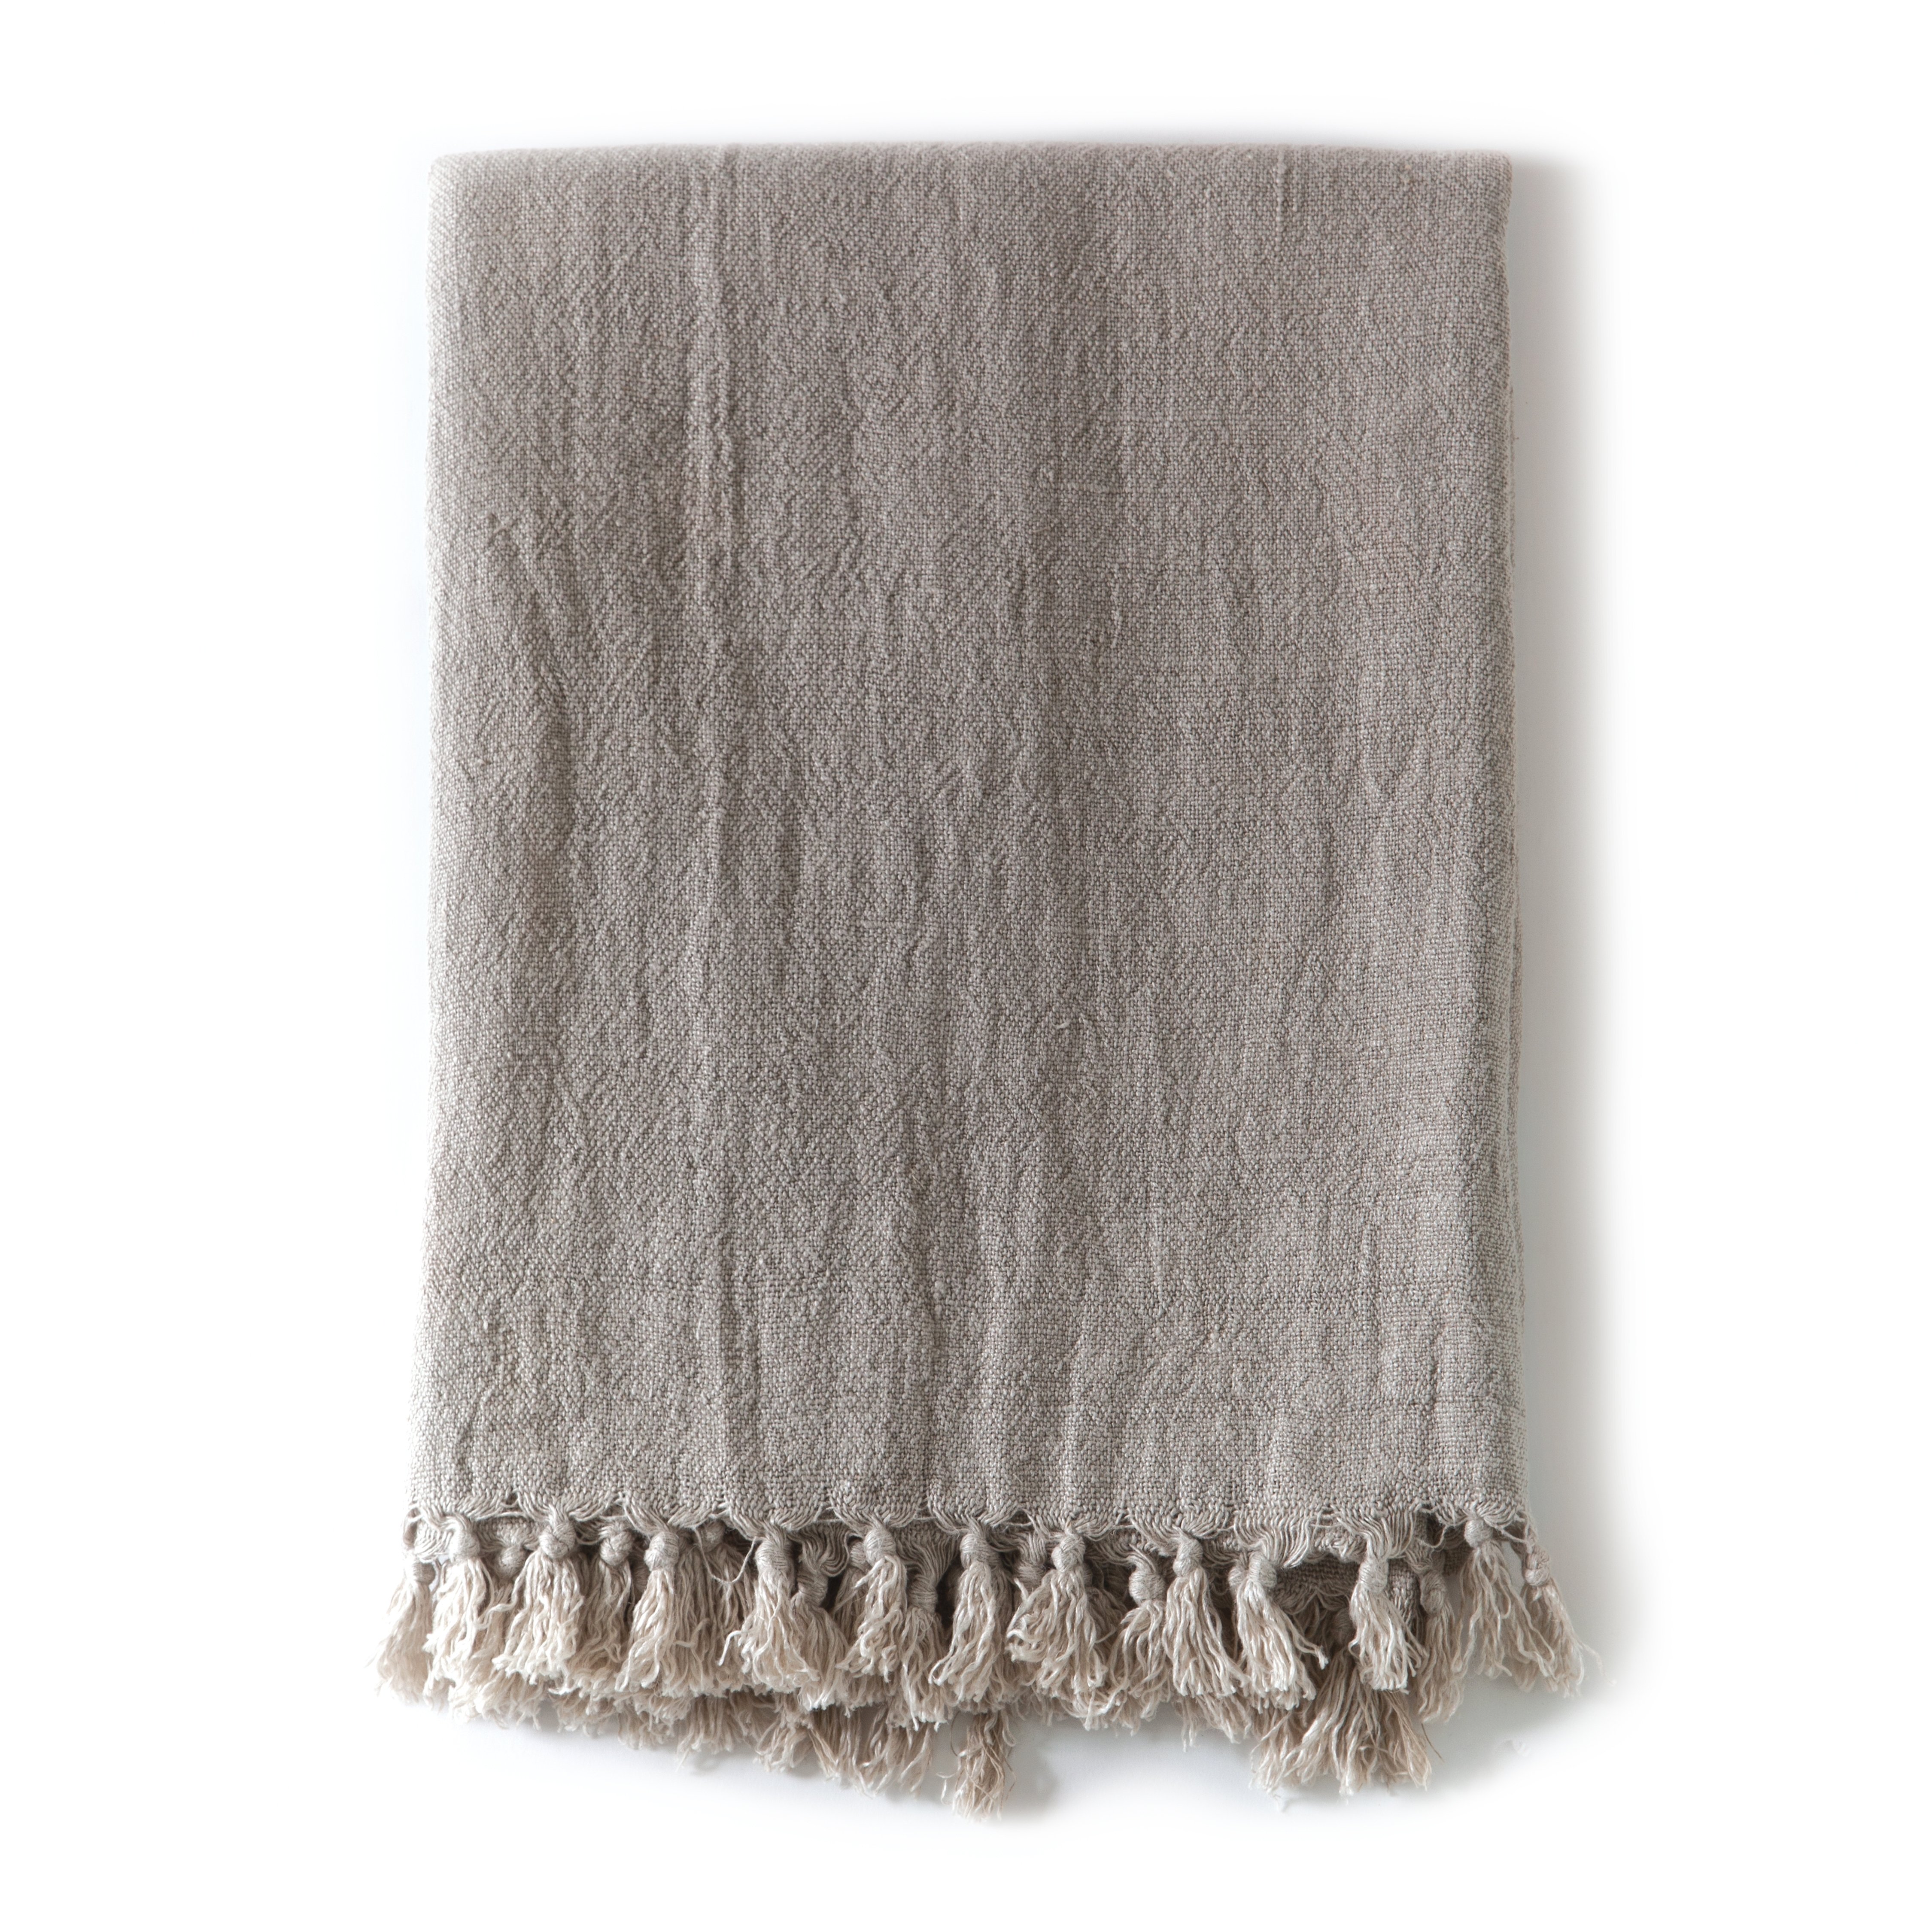 Montauk Linen Blanket by Pom Pom at Home - Image 0